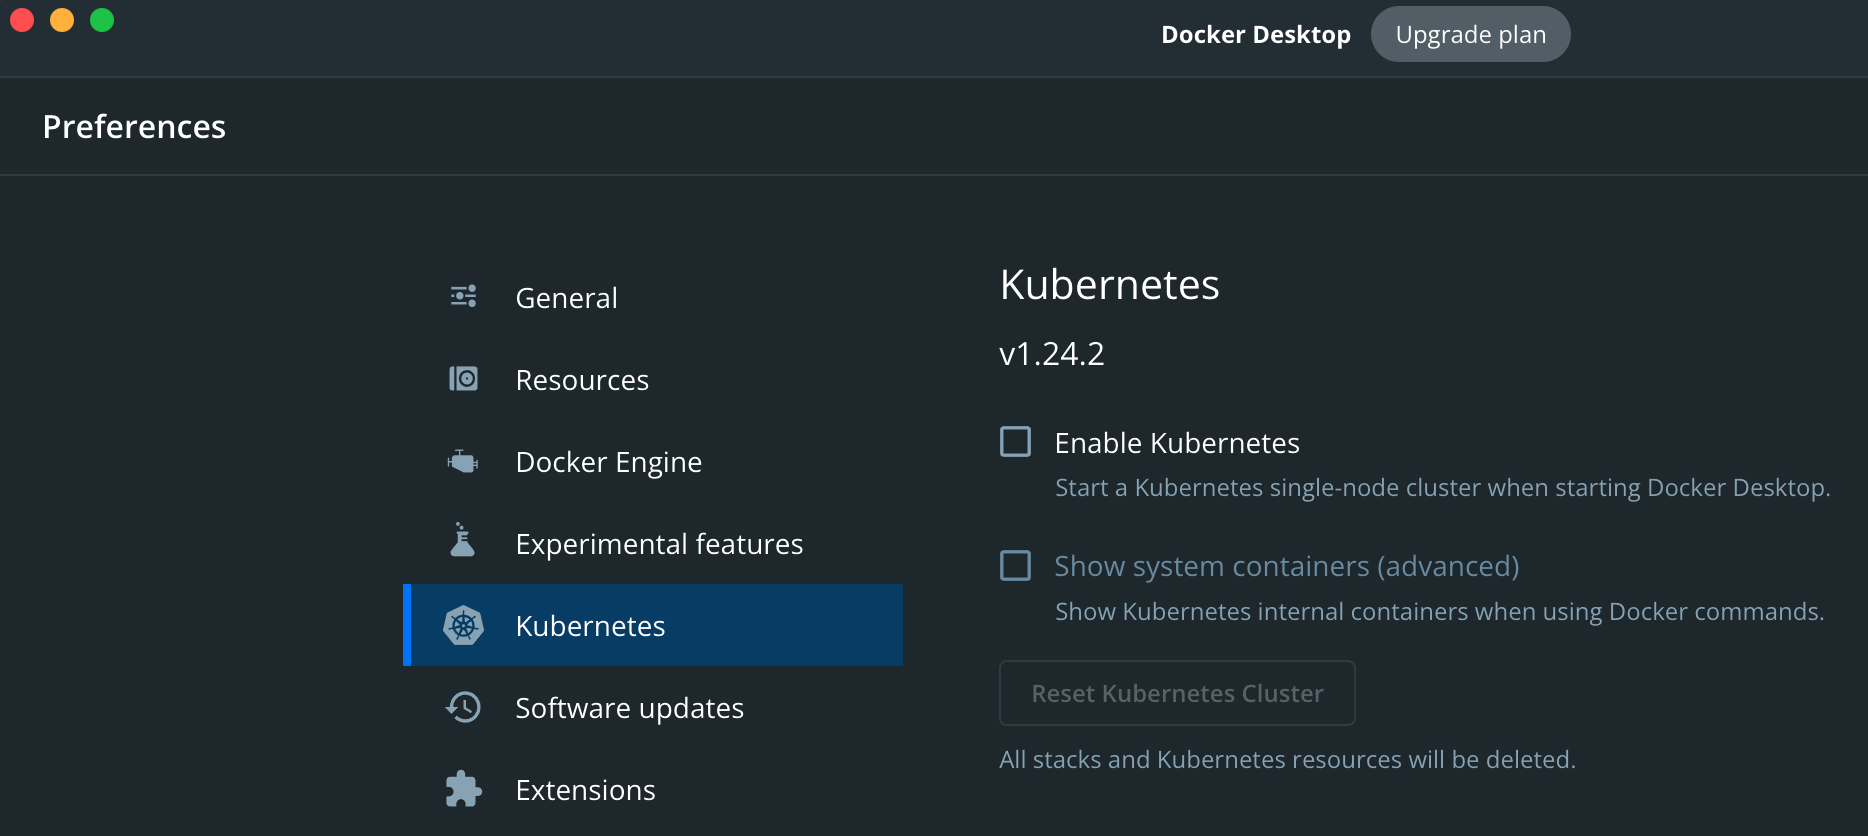 Figure 2: Kubernetes preinstalled with Docker Desktop